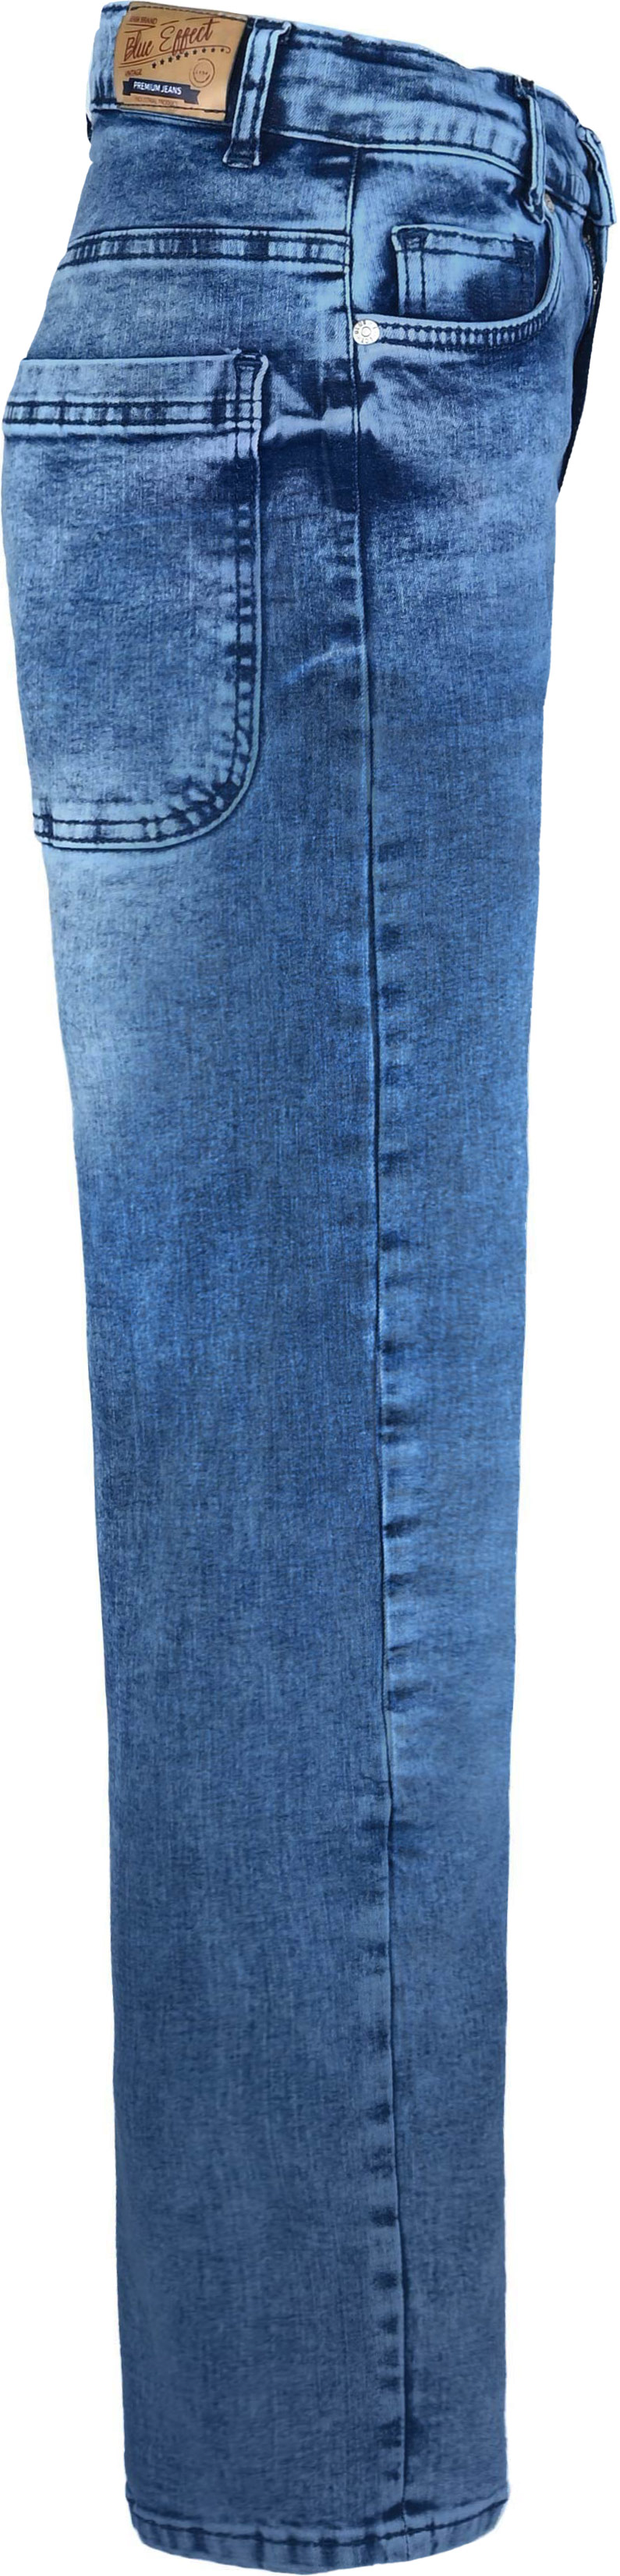 2844-NOS Boys Baggy Jeans verfügbar in Slim,Normal